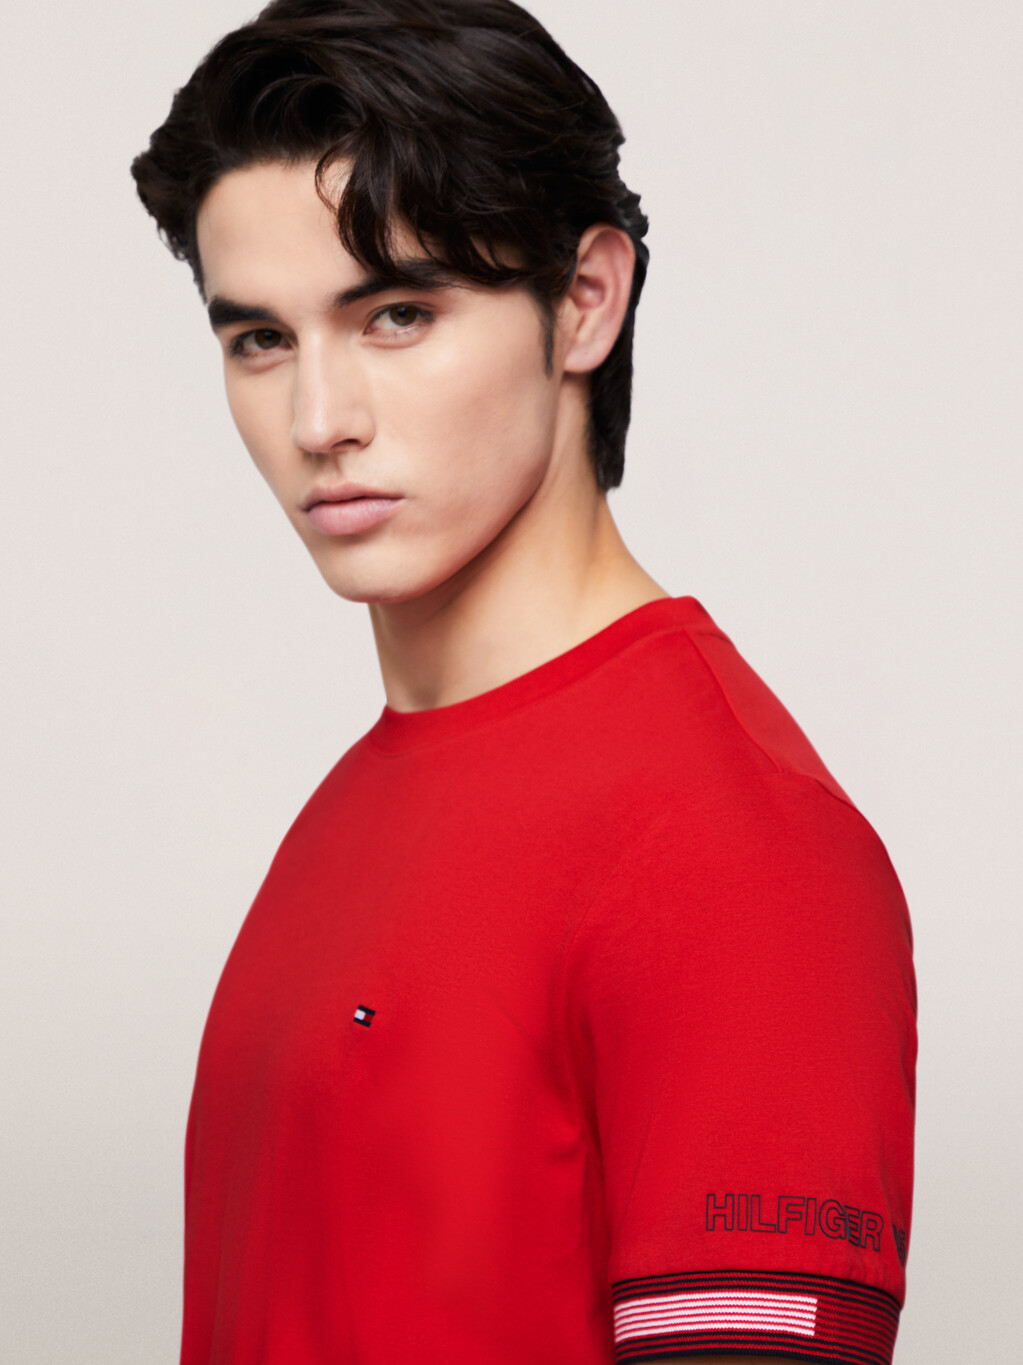 Stripe Cuff T-Shirt, Primary Red, hi-res